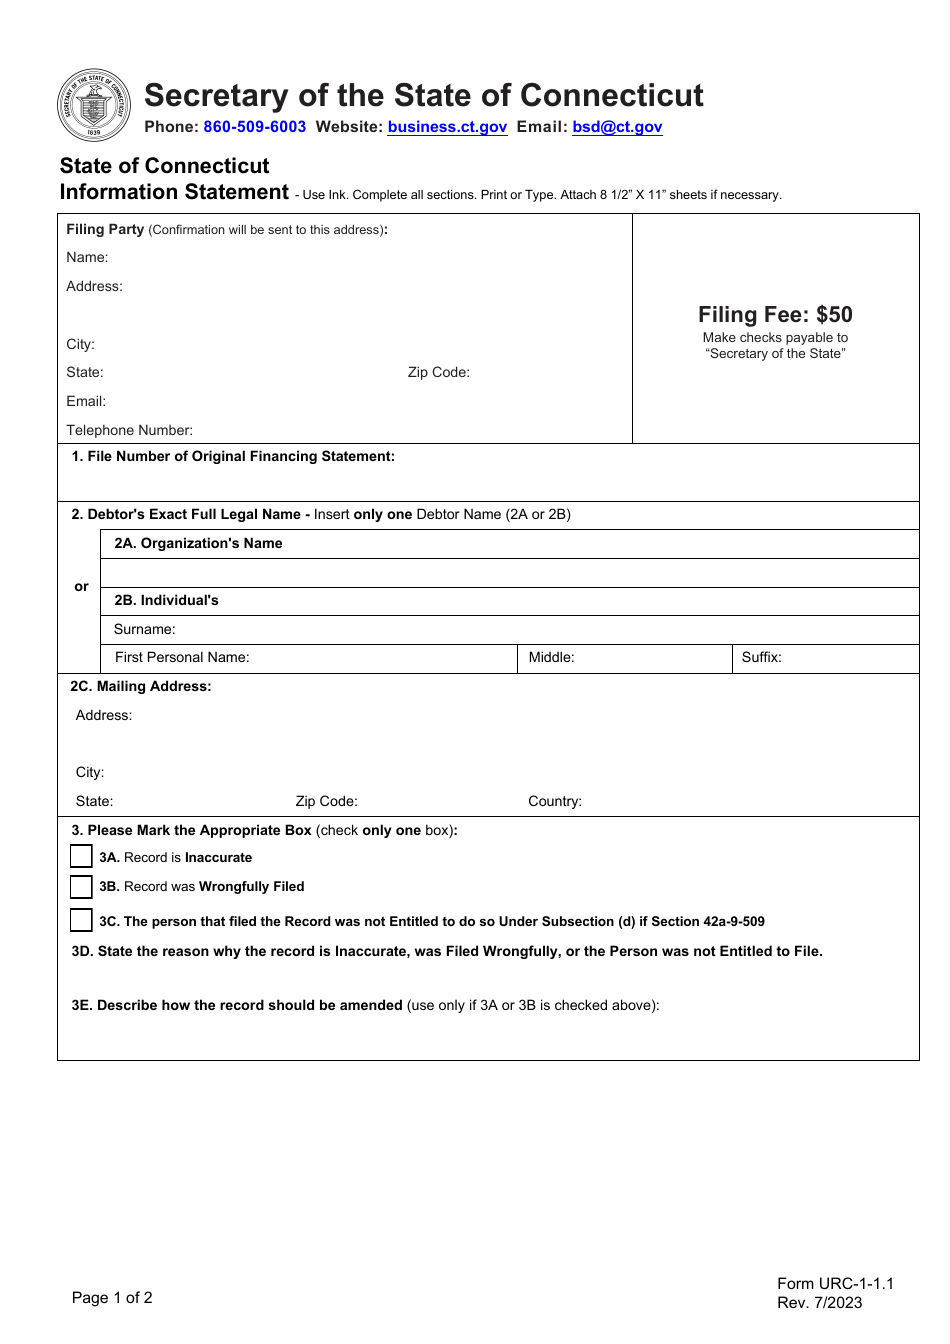 Form URC-1-1.1 Information Statement - Connecticut, Page 1